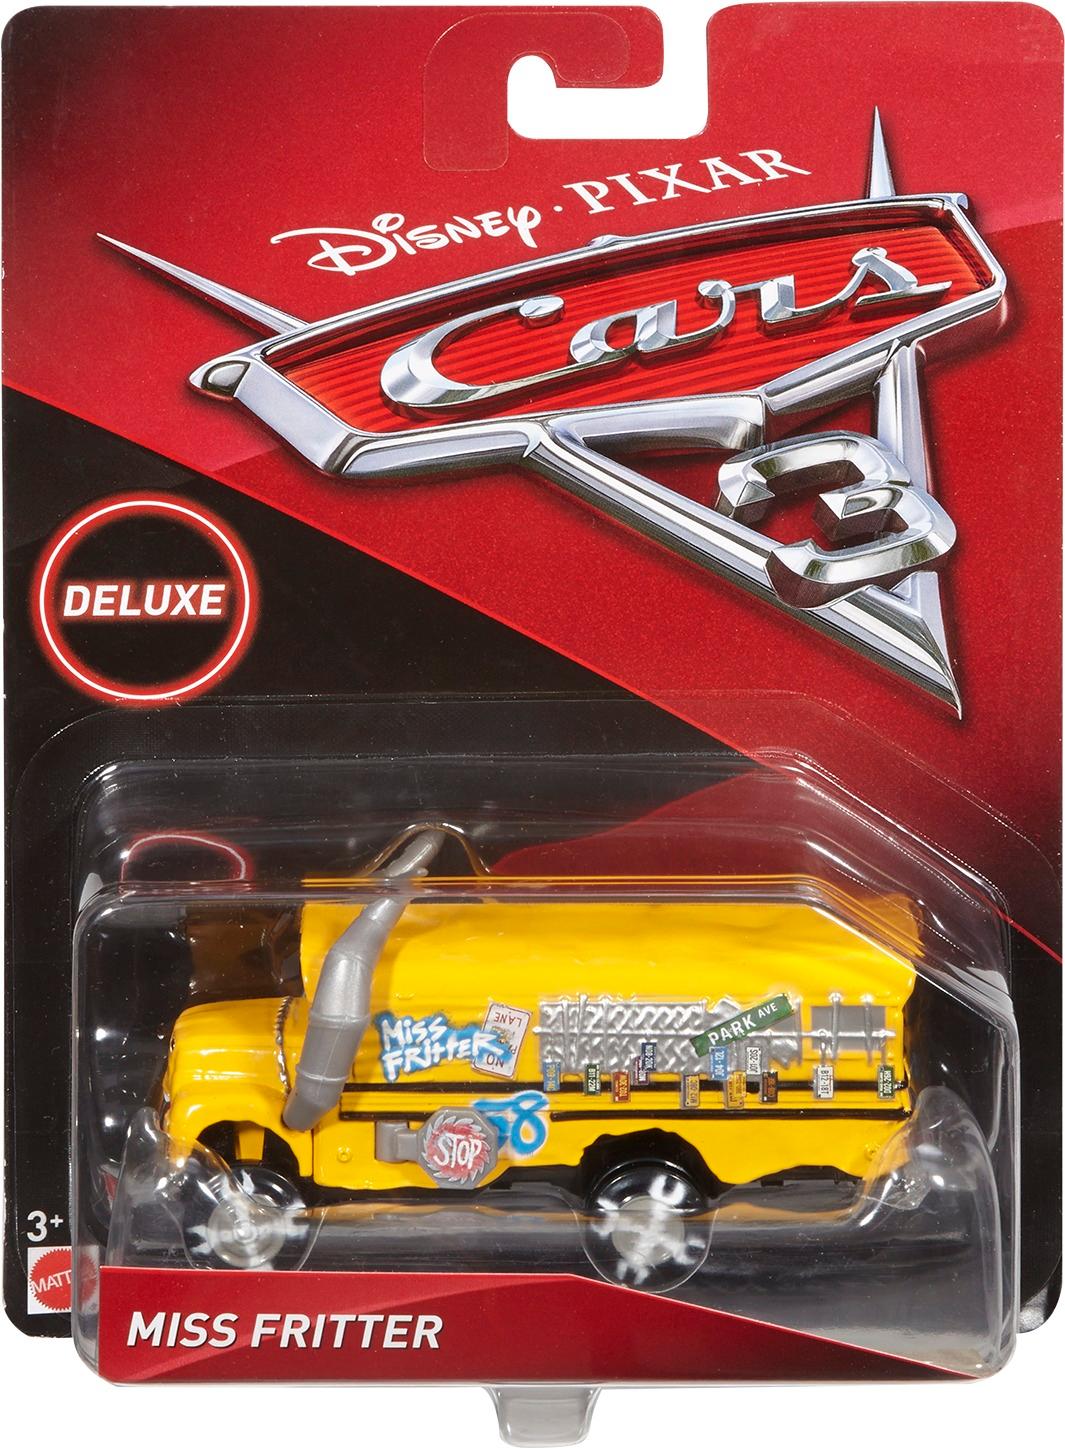 Disney Pixar Cars 3 Die-Cast Singles Assortment - The Toy Box Hanover